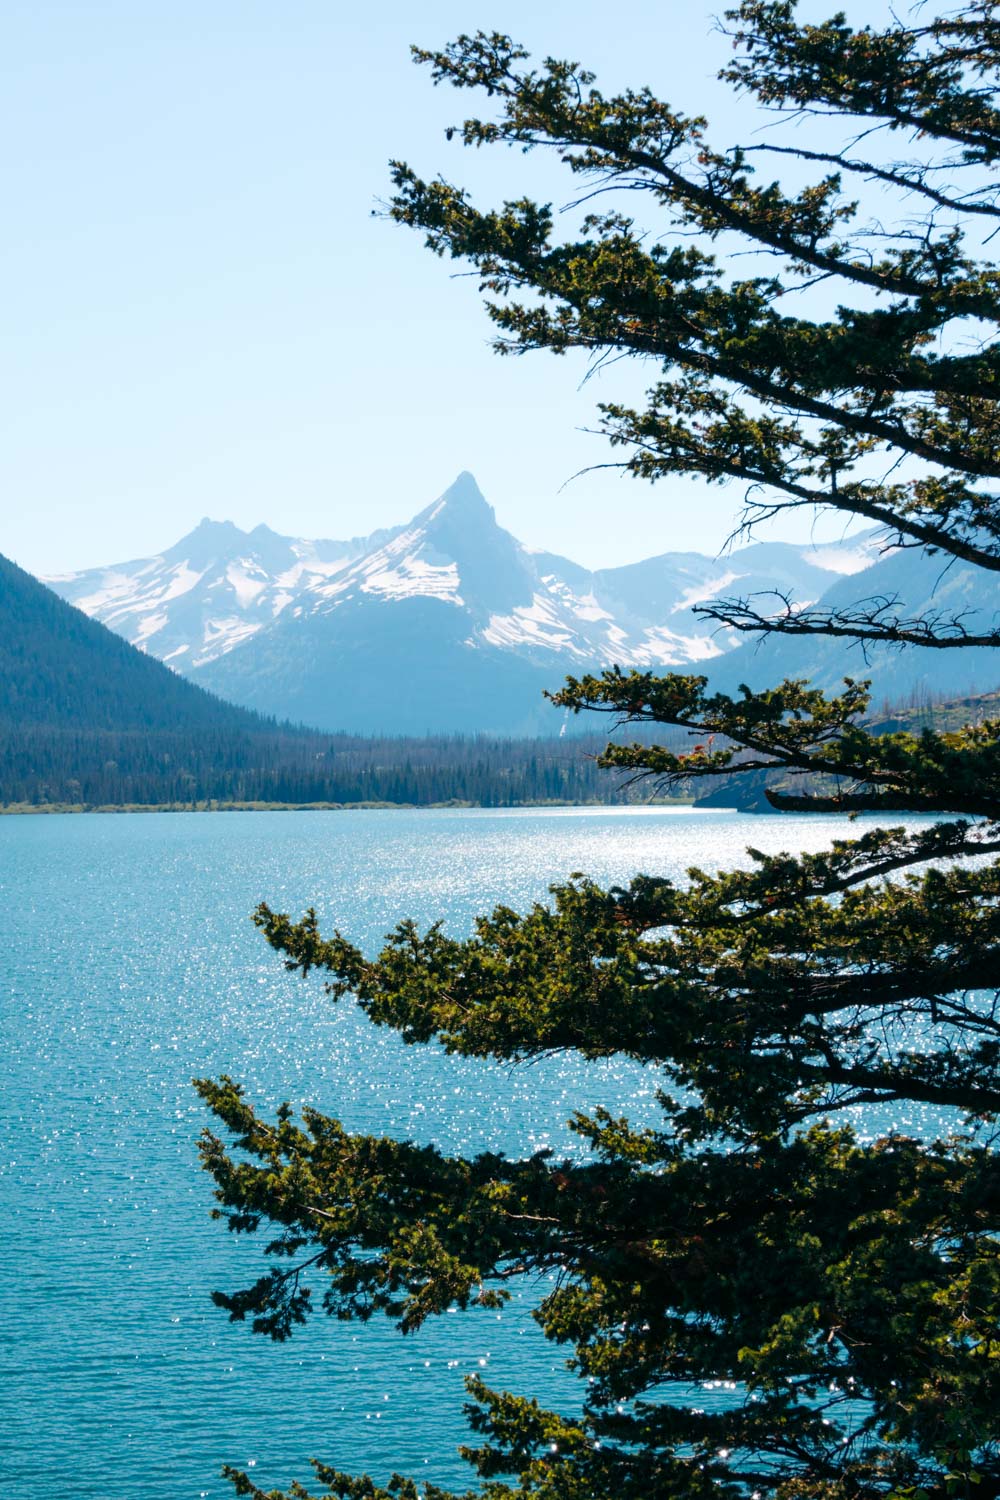 Glacier National Park Travel Guide, Visit 5 Main Sections - Roads and Destinations